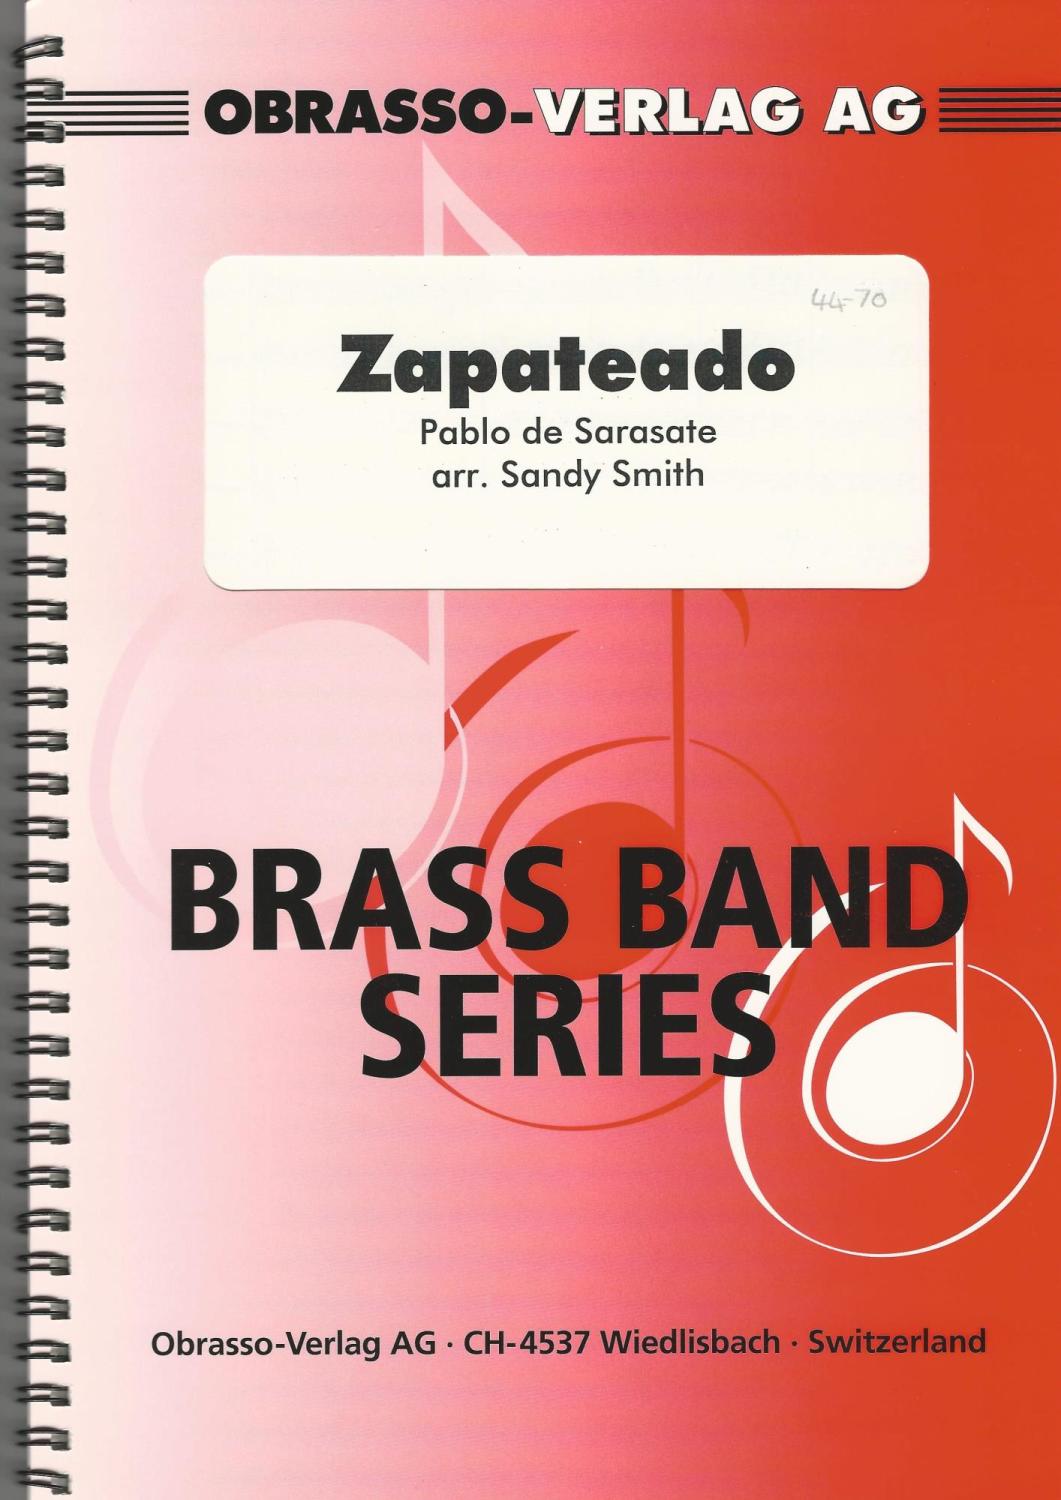 Zapateado for Brass Band - Pablo de Sarasate arr. Sandy Smith